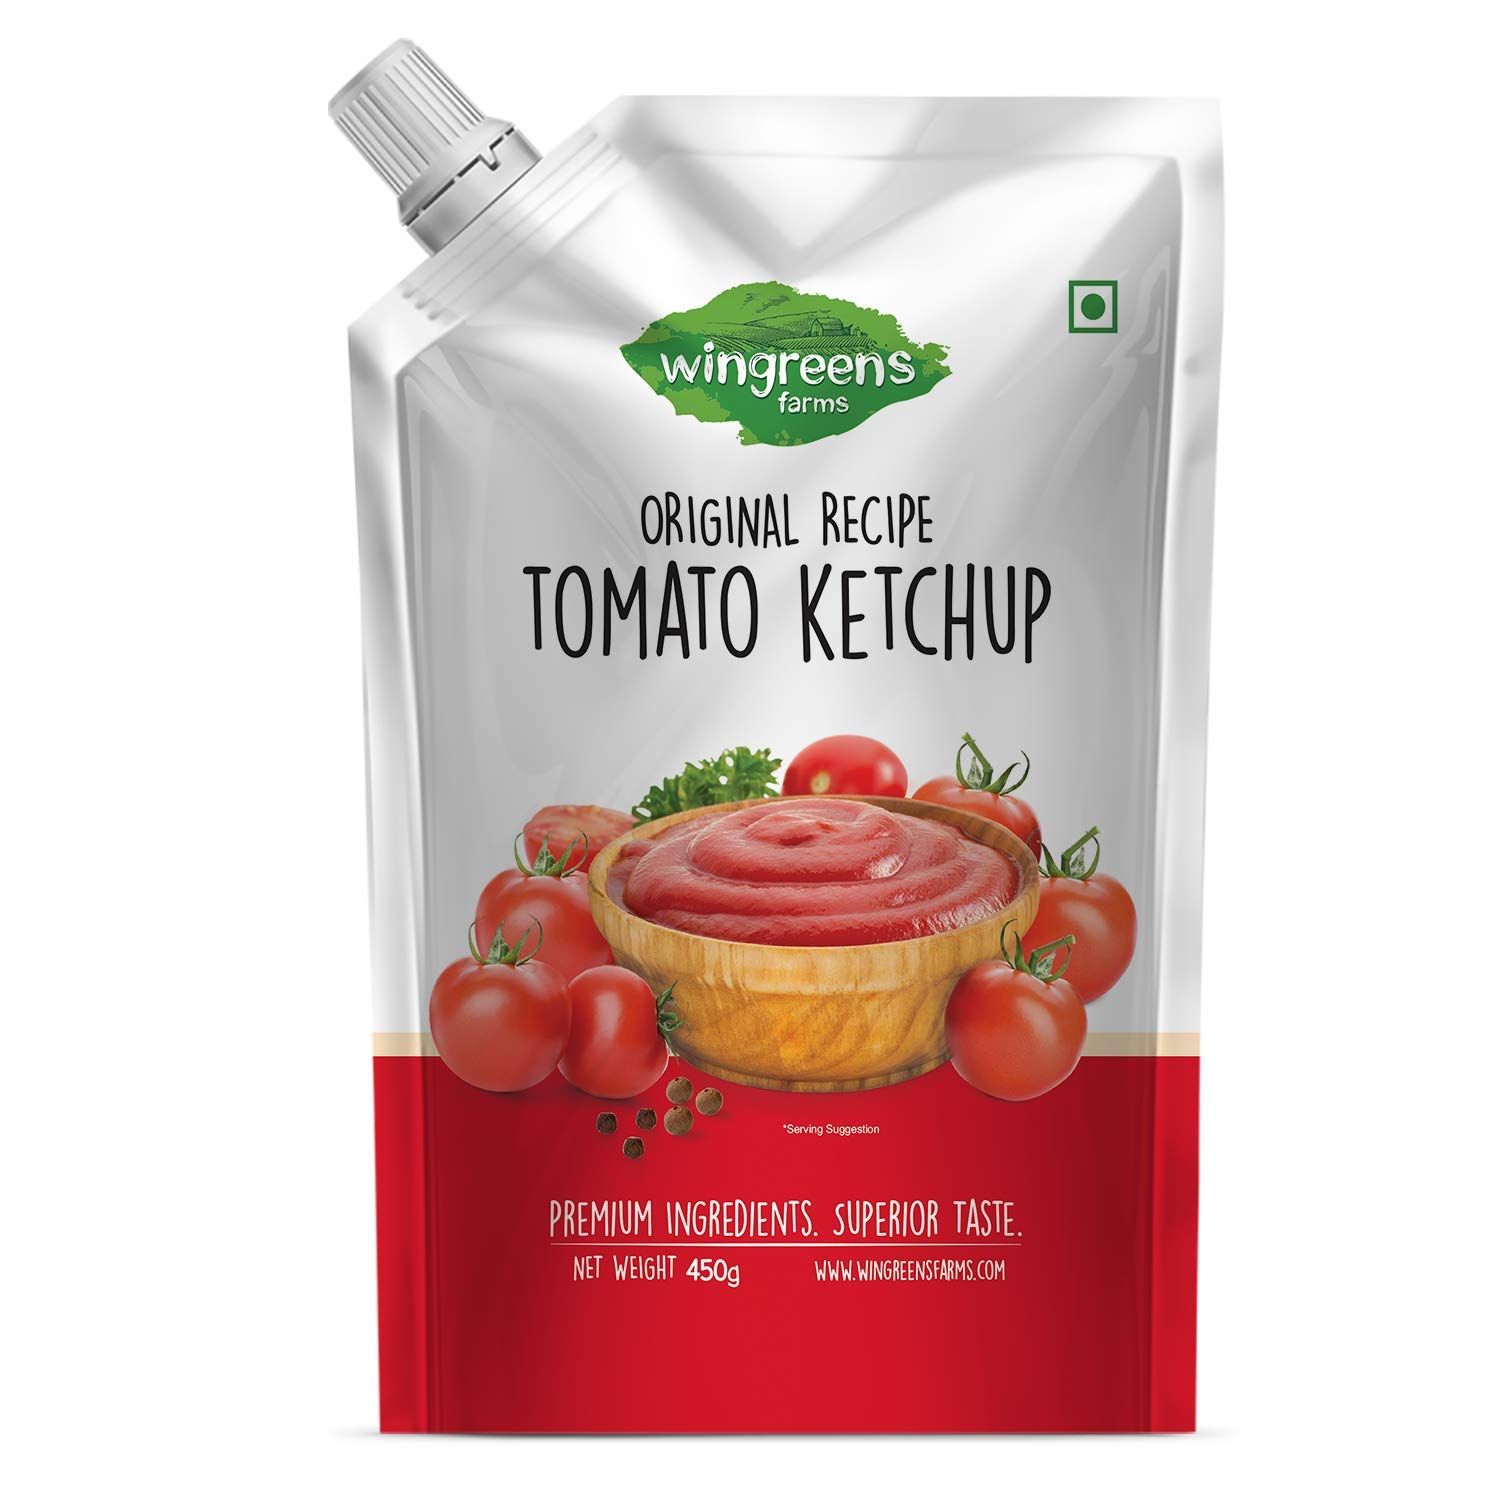 Wingreens Farms Tomato Ketchup Image